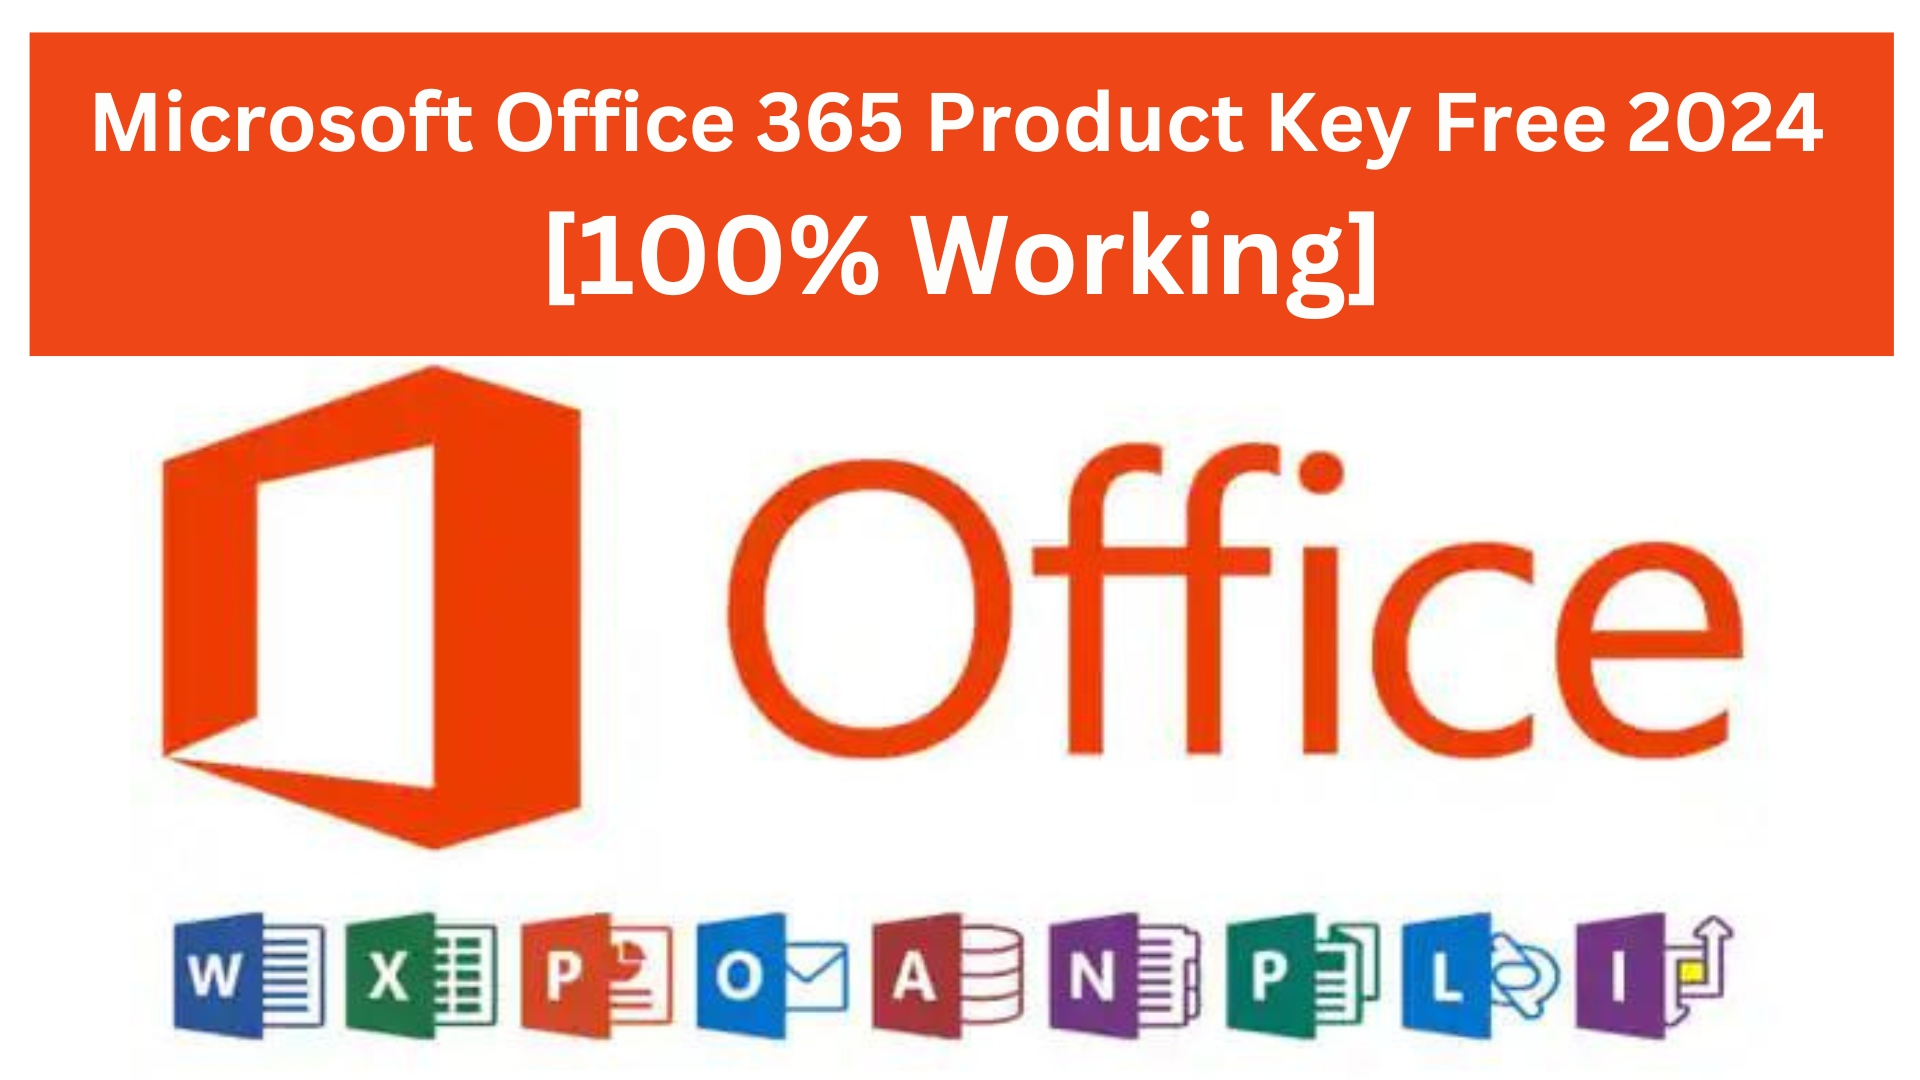 Microsoft Office 365 Product Key Free 2024